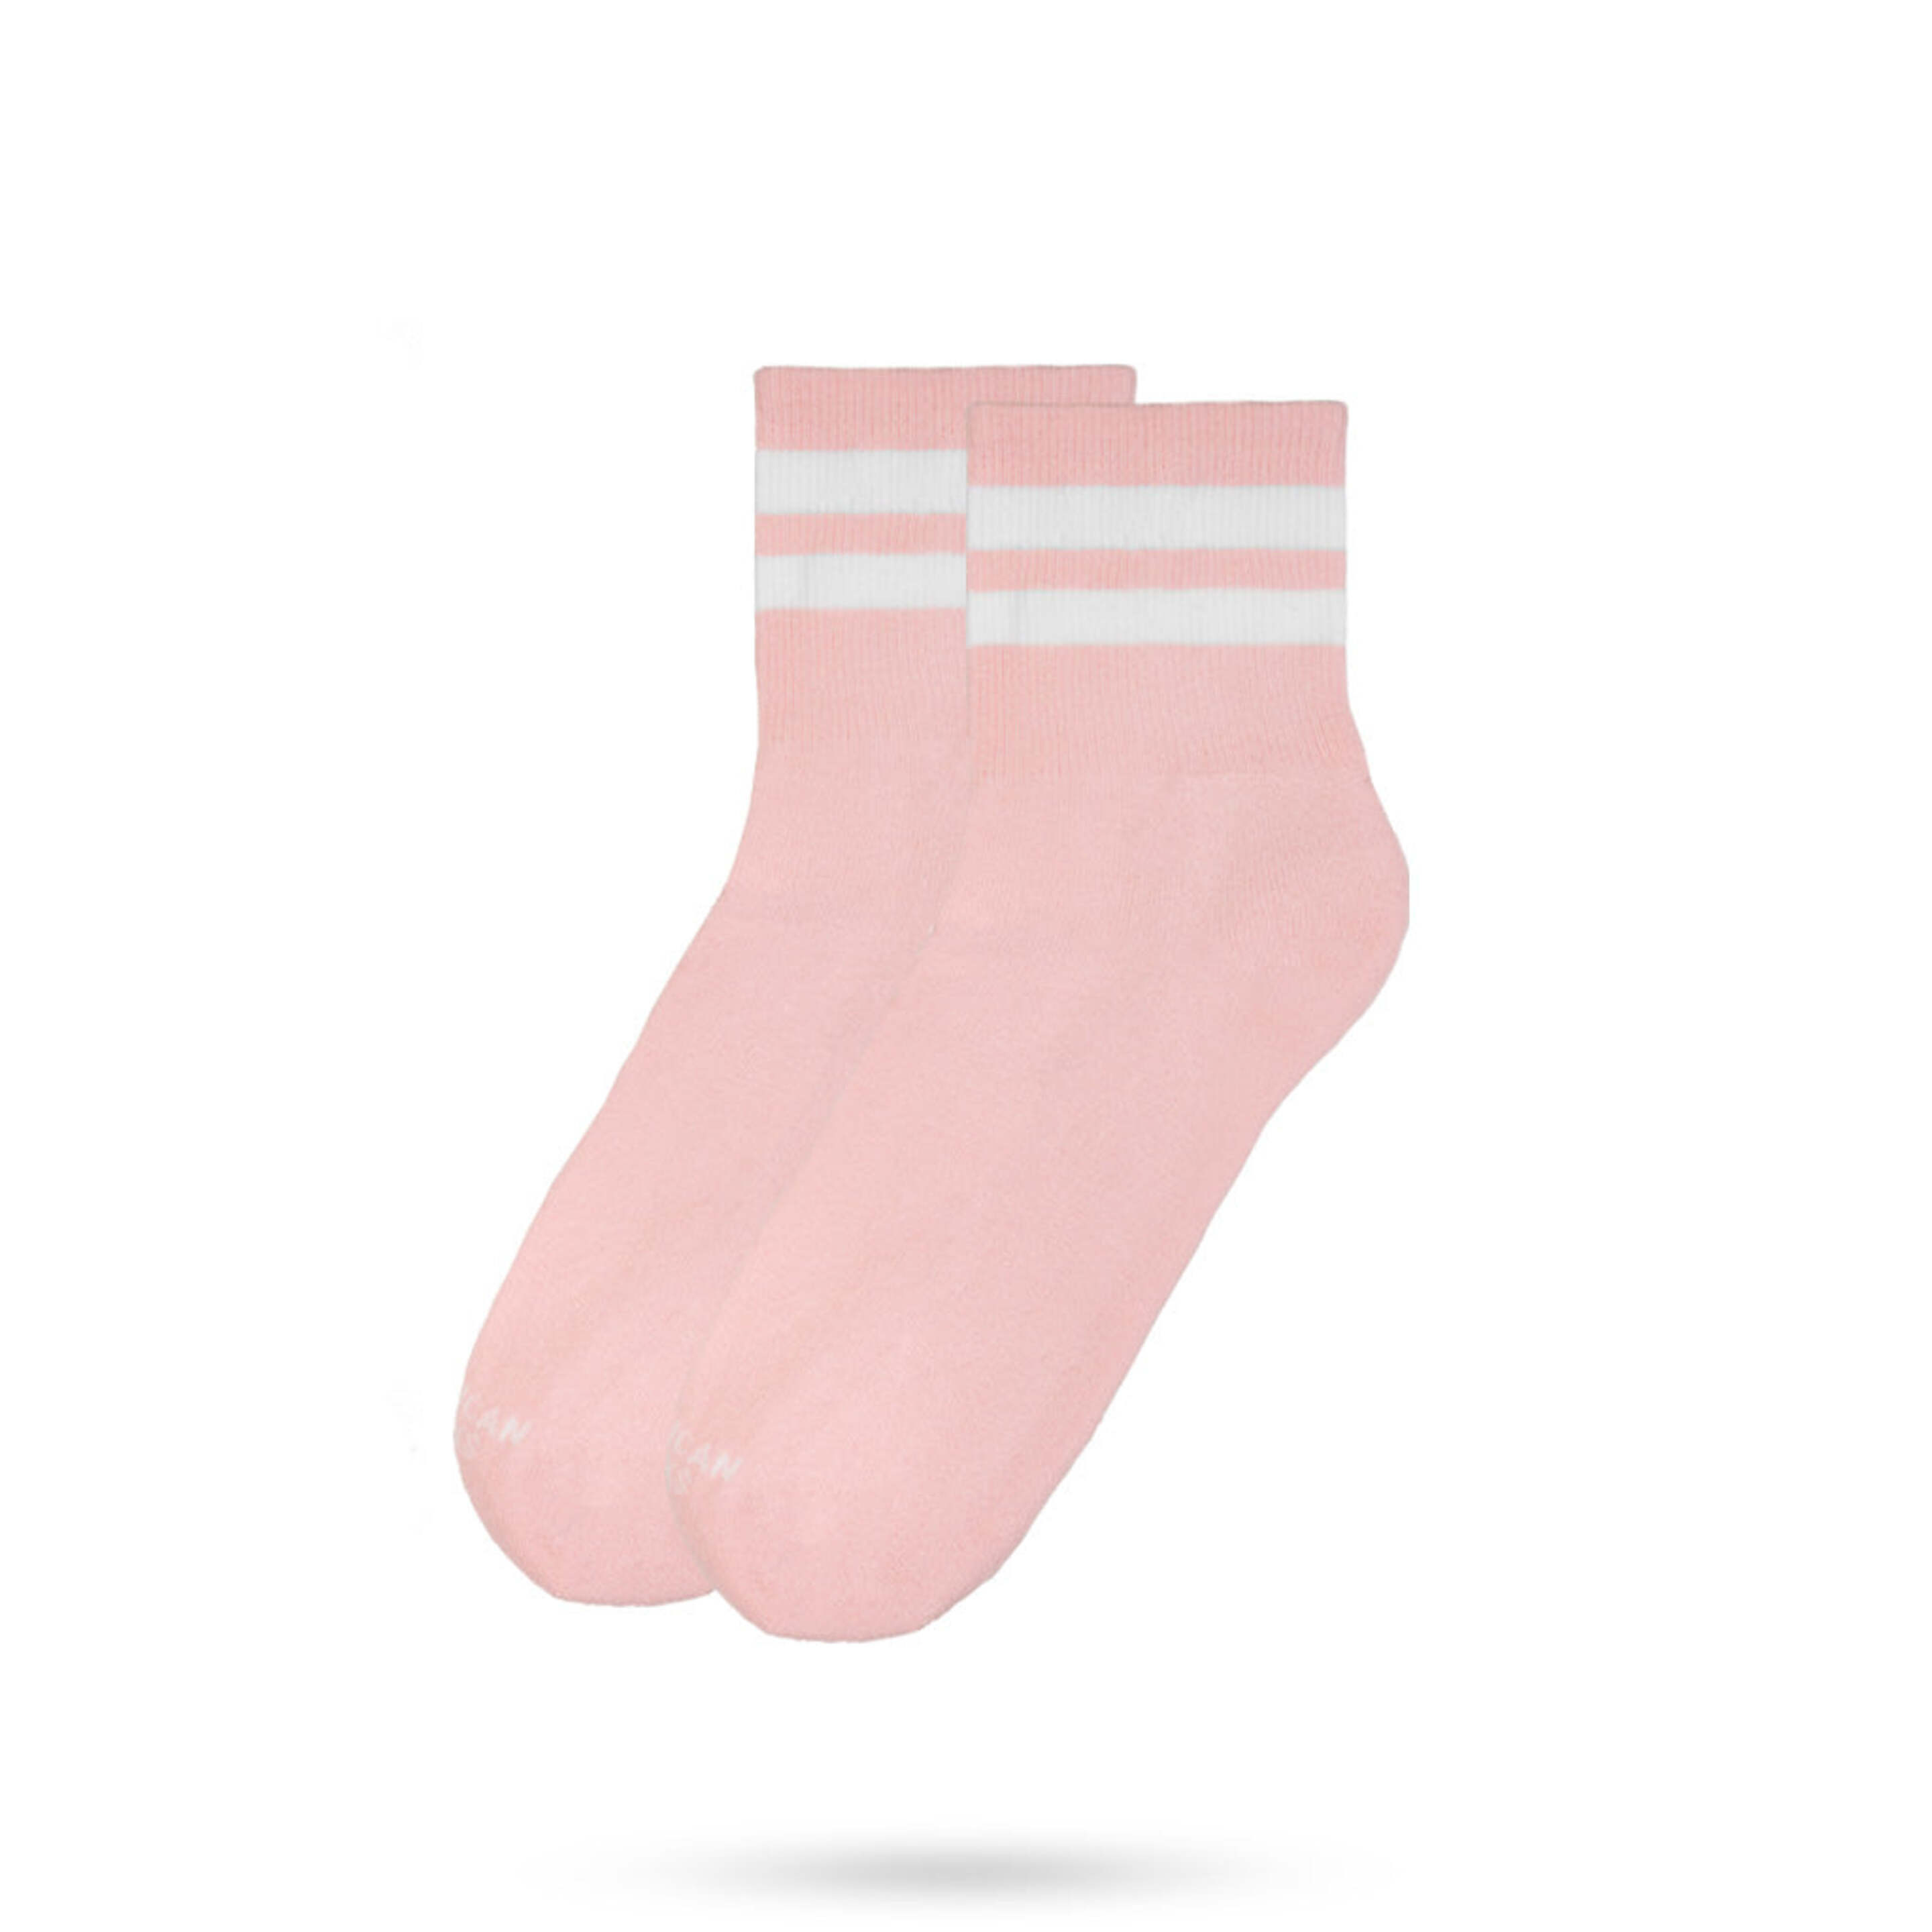 Meias American Socks - Sakura - Ankle High